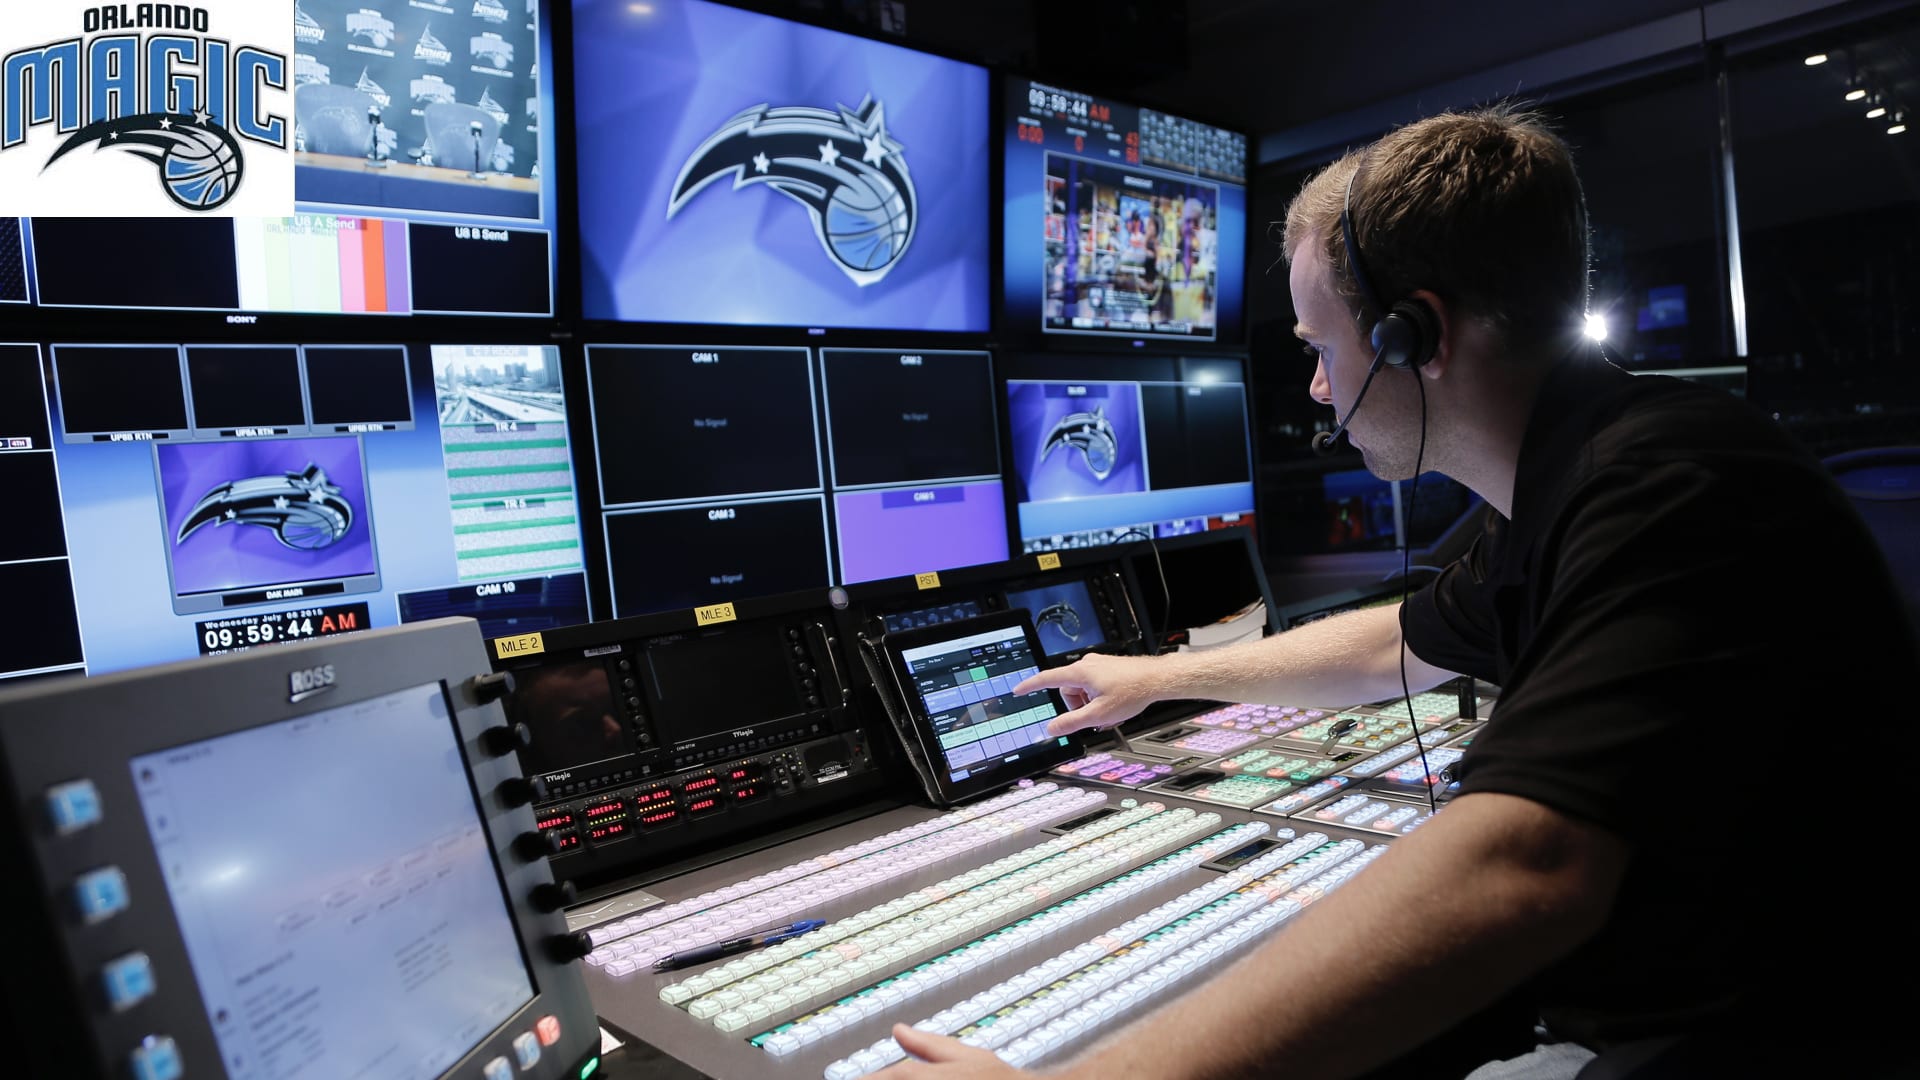 Orlando Magic production crew manning the control room